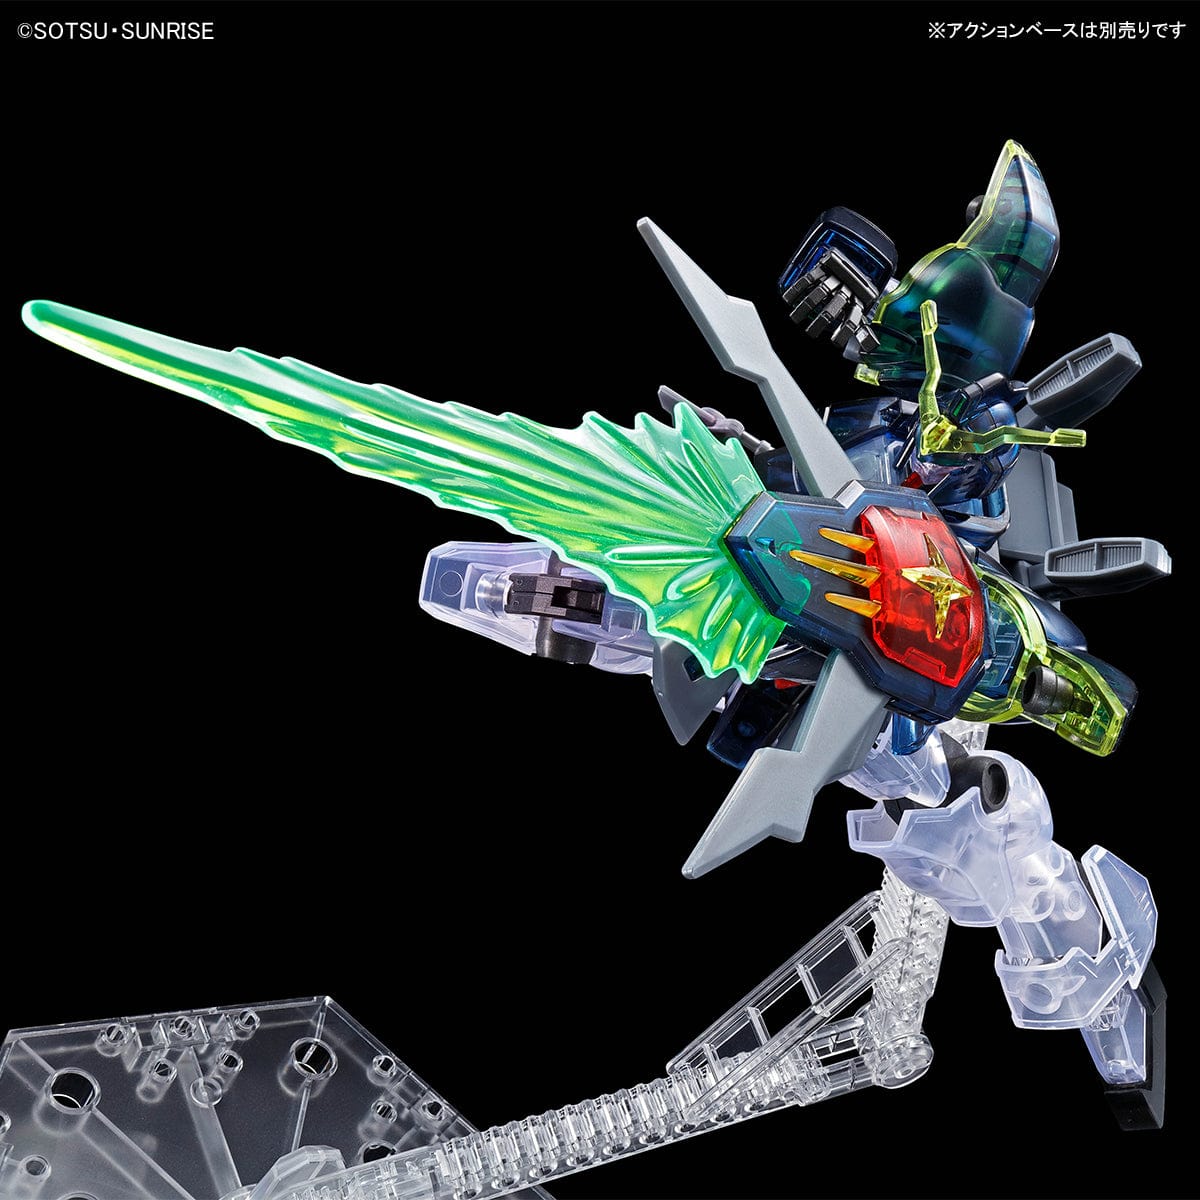 Mobile Suit Gundam Wing Toys & Hobbies: Models & Kits:Science Fiction:Gundam HG XXXG-01D GUNDAM DEATHSCYTHE [CLEAR COLOR]